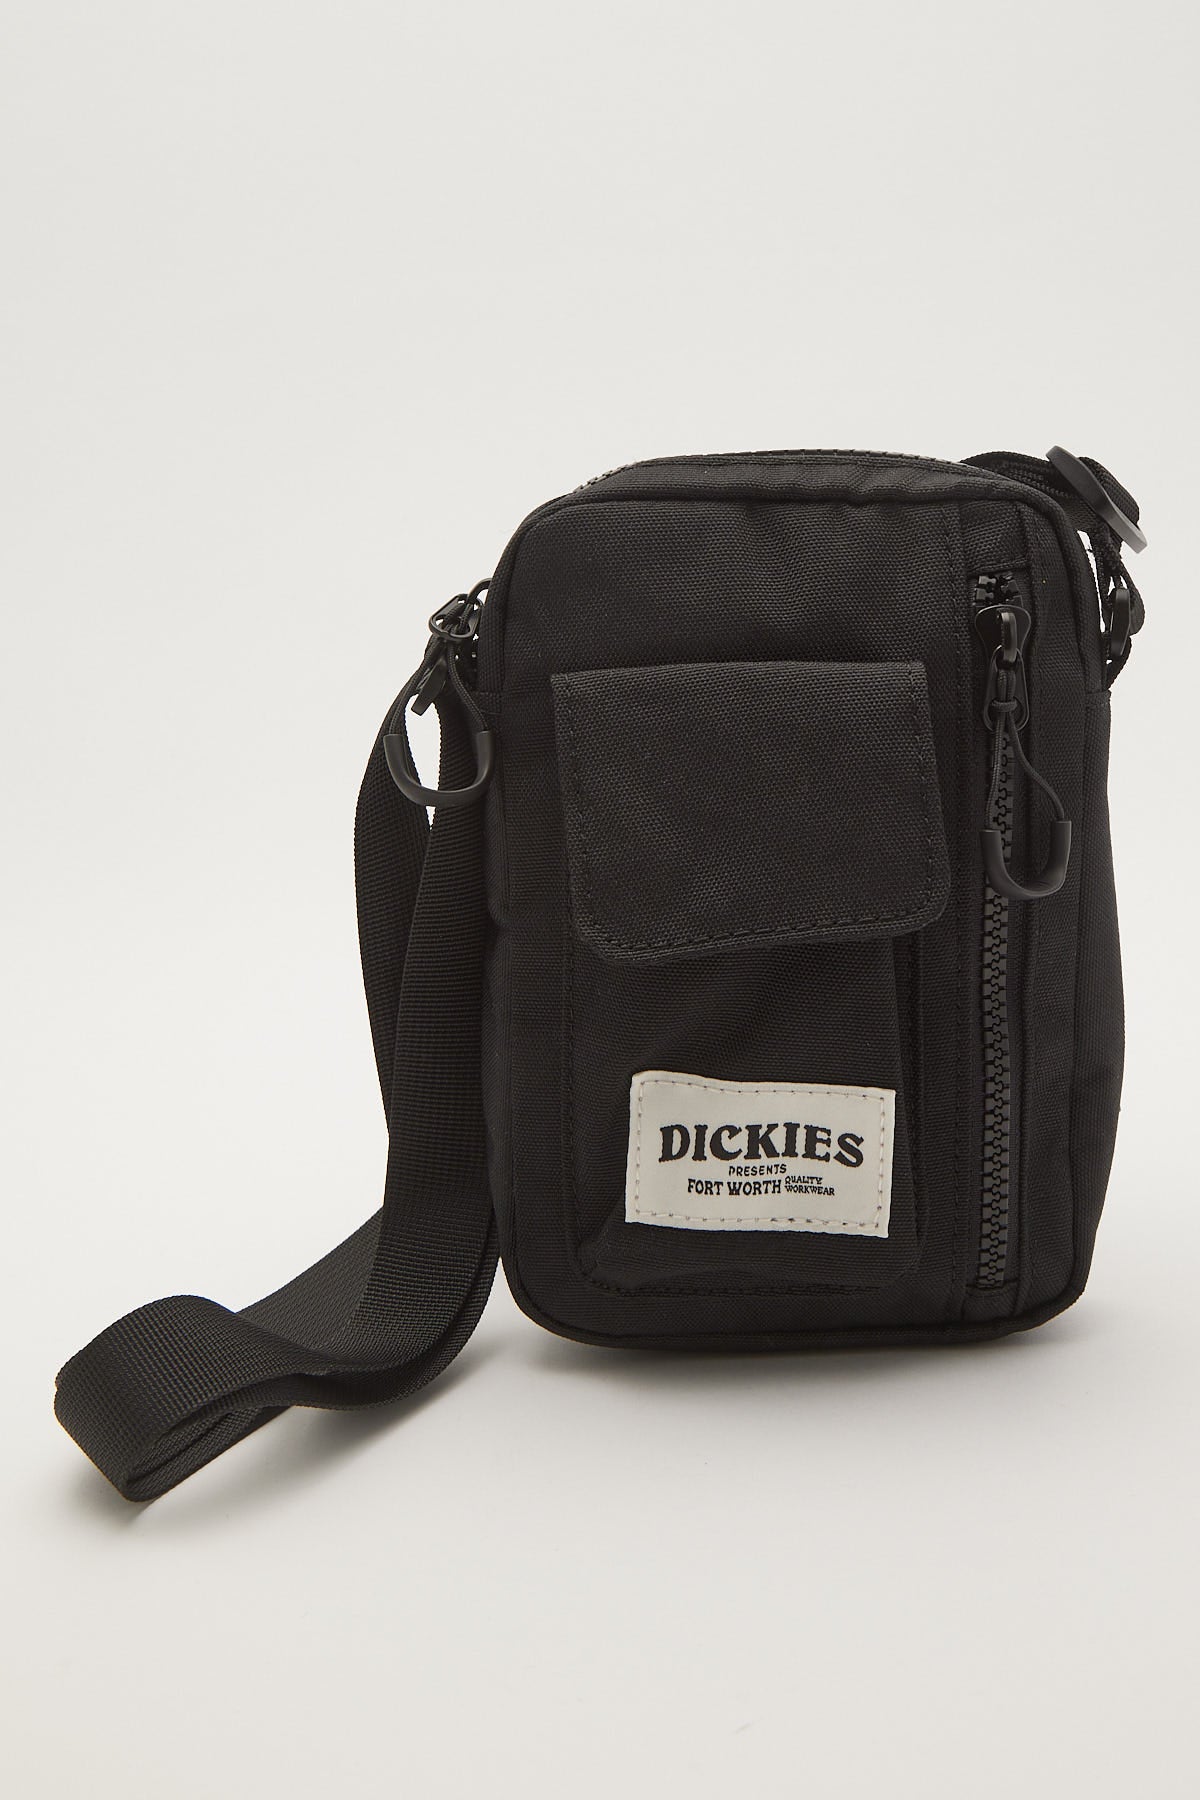 Dickies Crossbody Bag Black